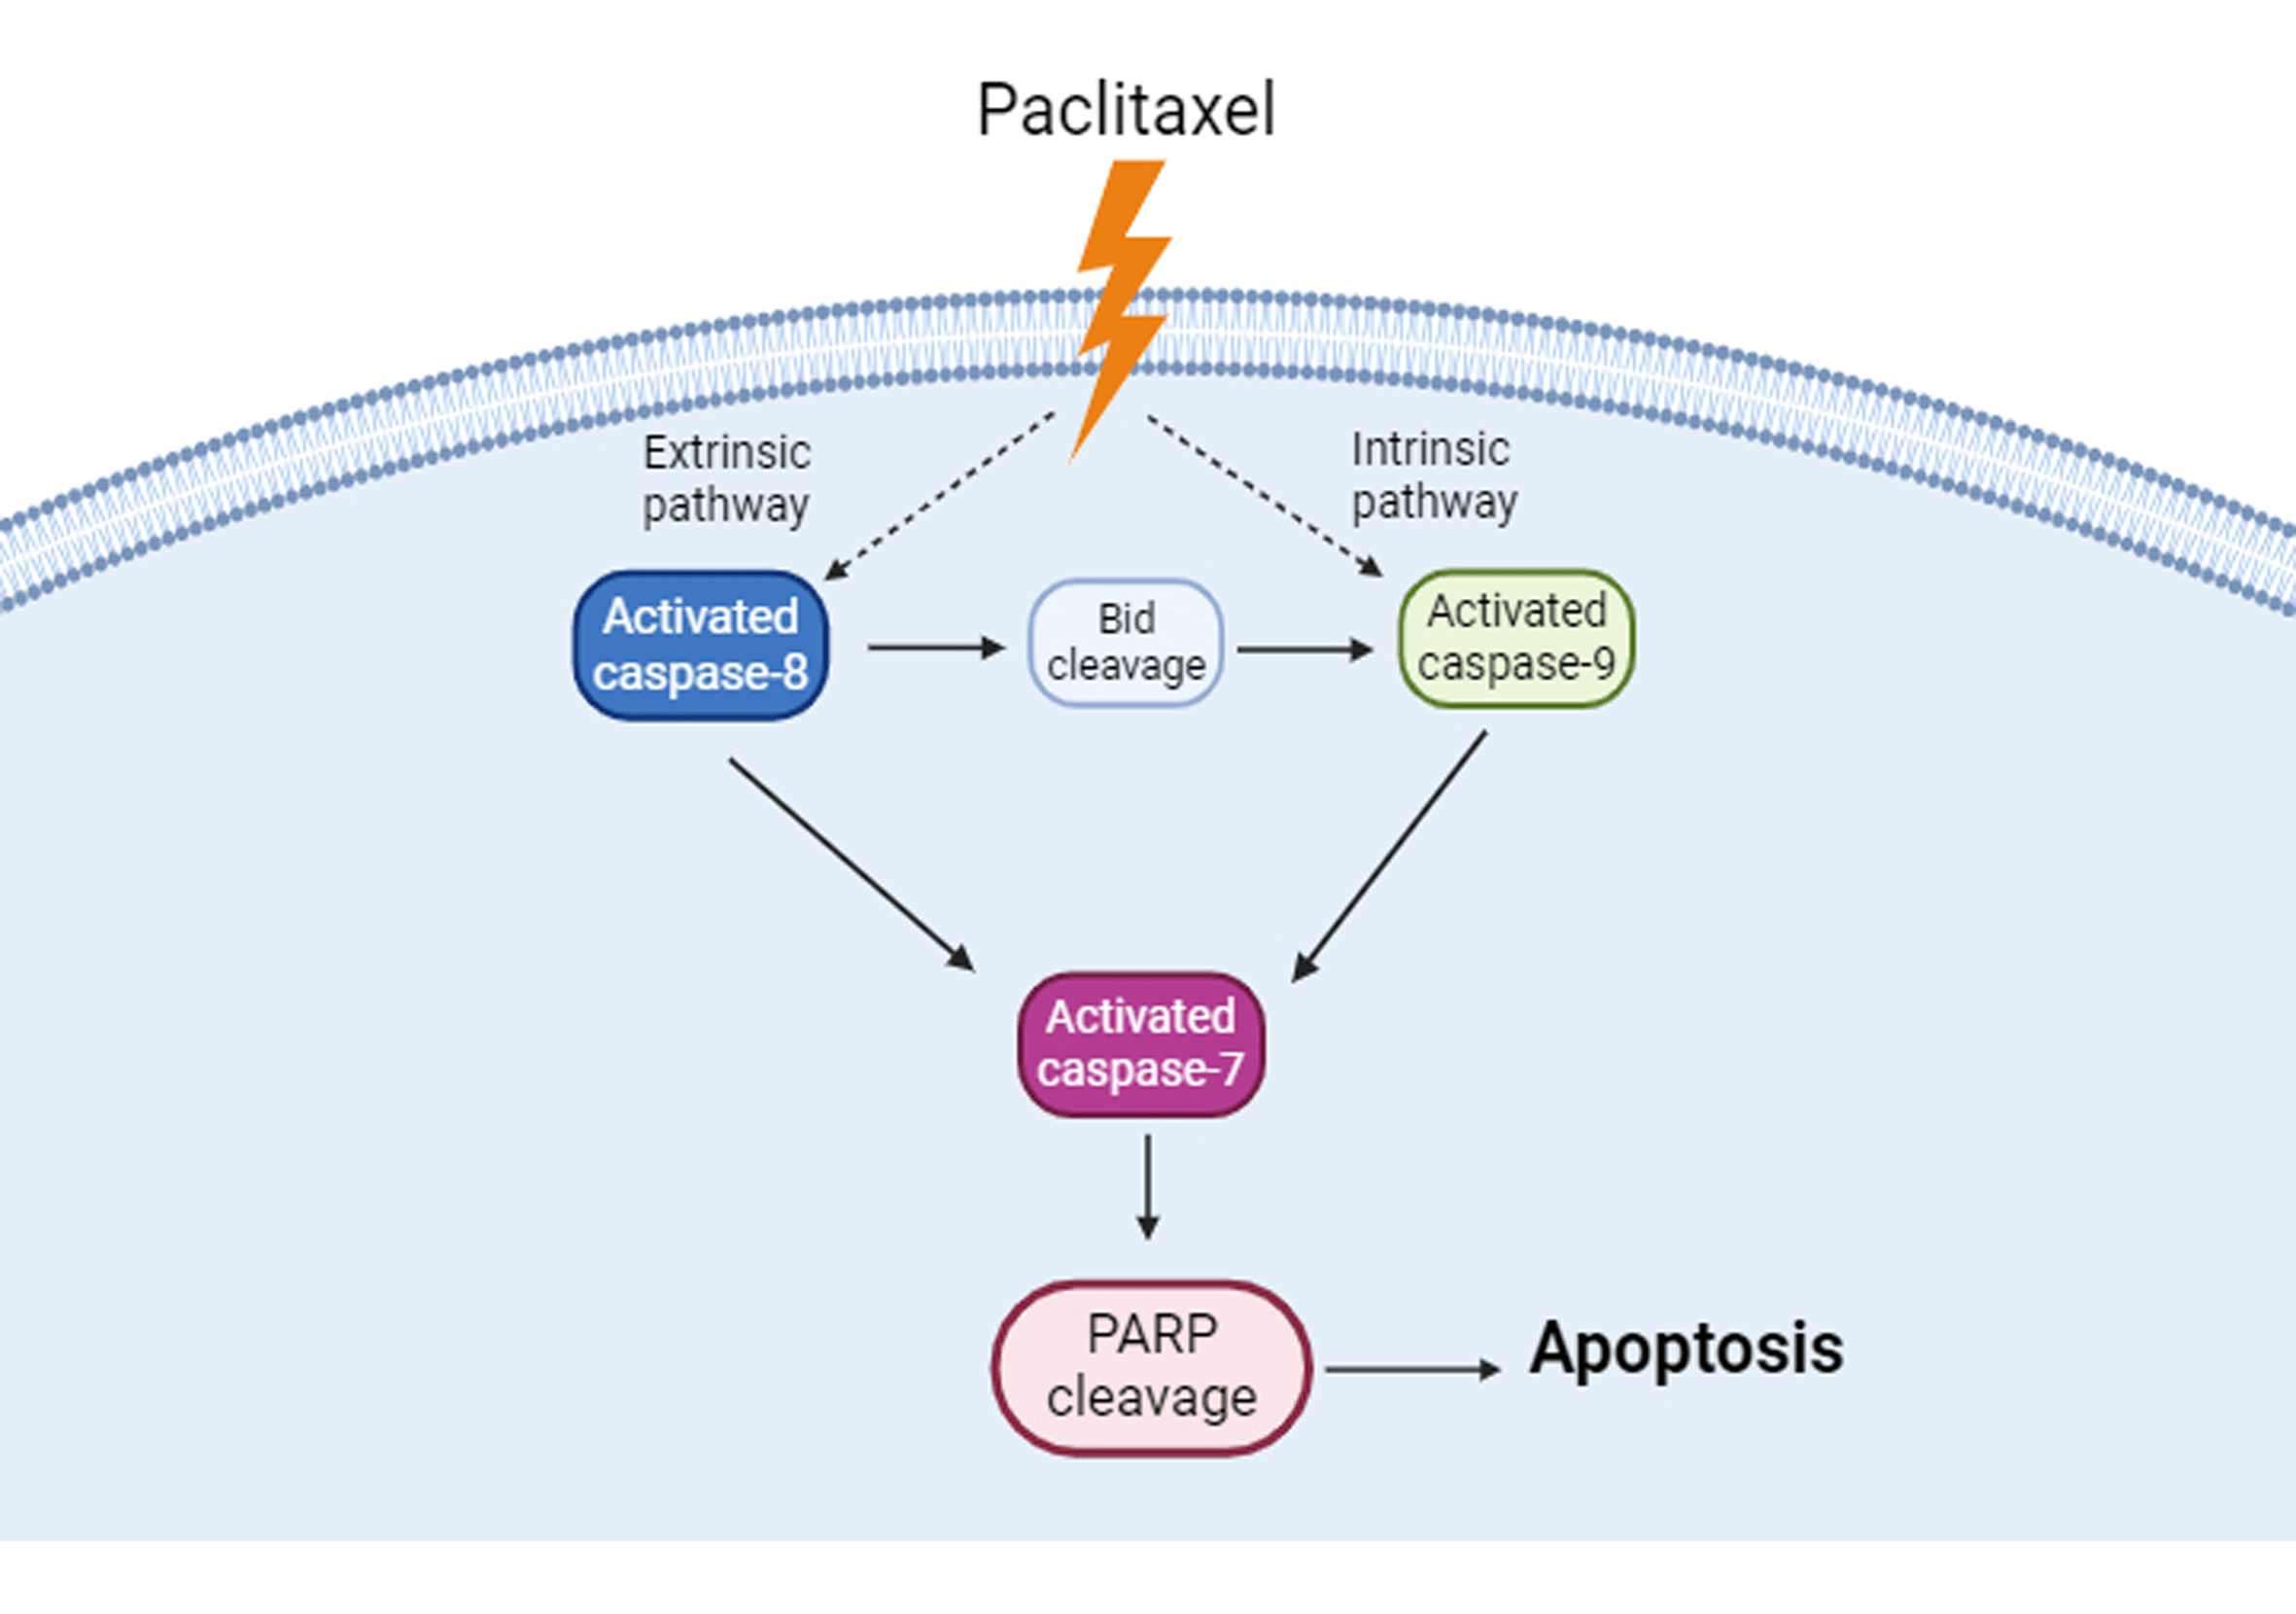 Paclitaxel induces human KOSC3 oral cancer cell apoptosis through caspase pathways